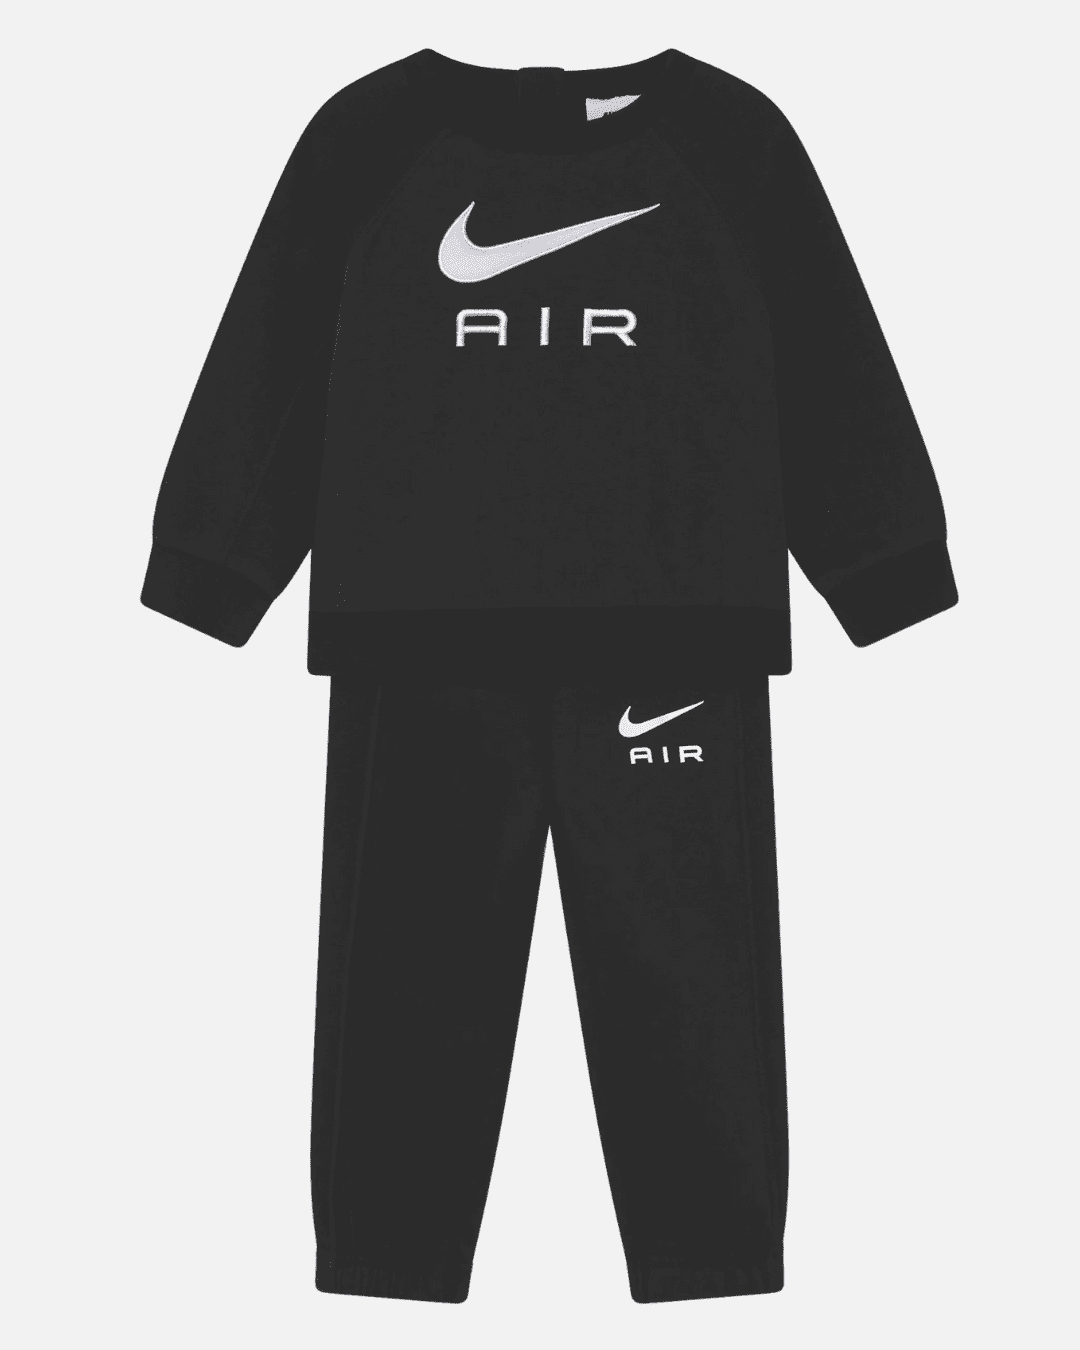 Nike Air Crew Baby-Set – Schwarz